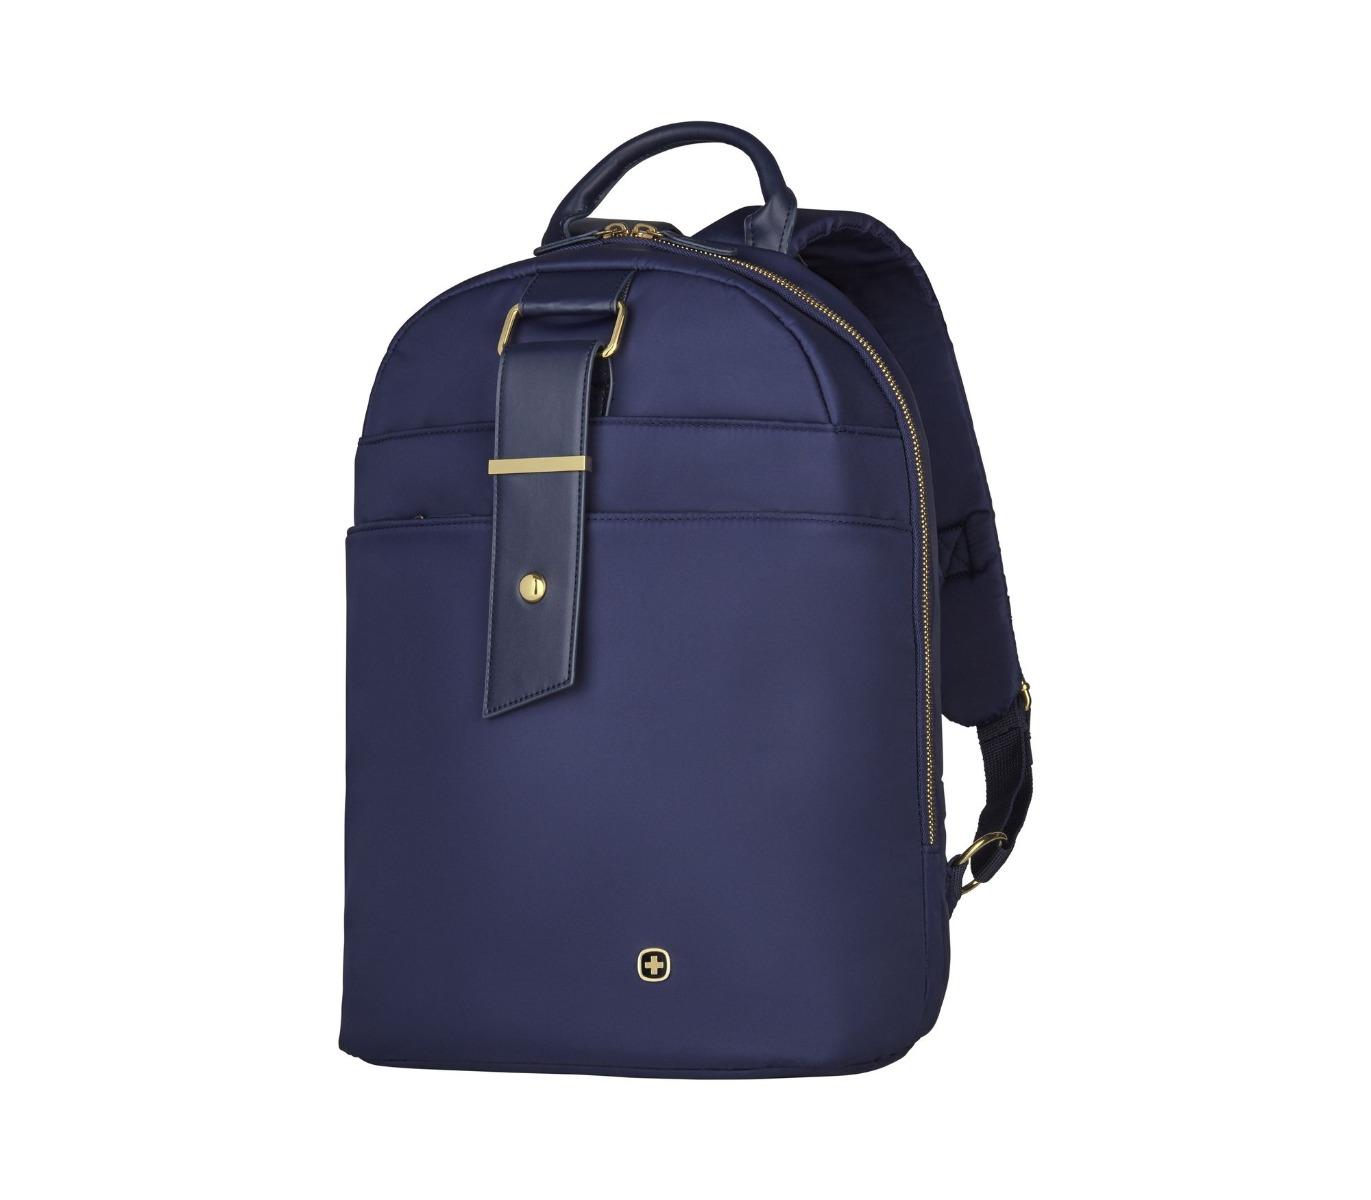 Sülearvuti seljakott Wenger Alexa Women's 13 Laptop Backpack with tablet pocket, Peacoat Blue (sinine), 11L, 17x28x39cm 700gr